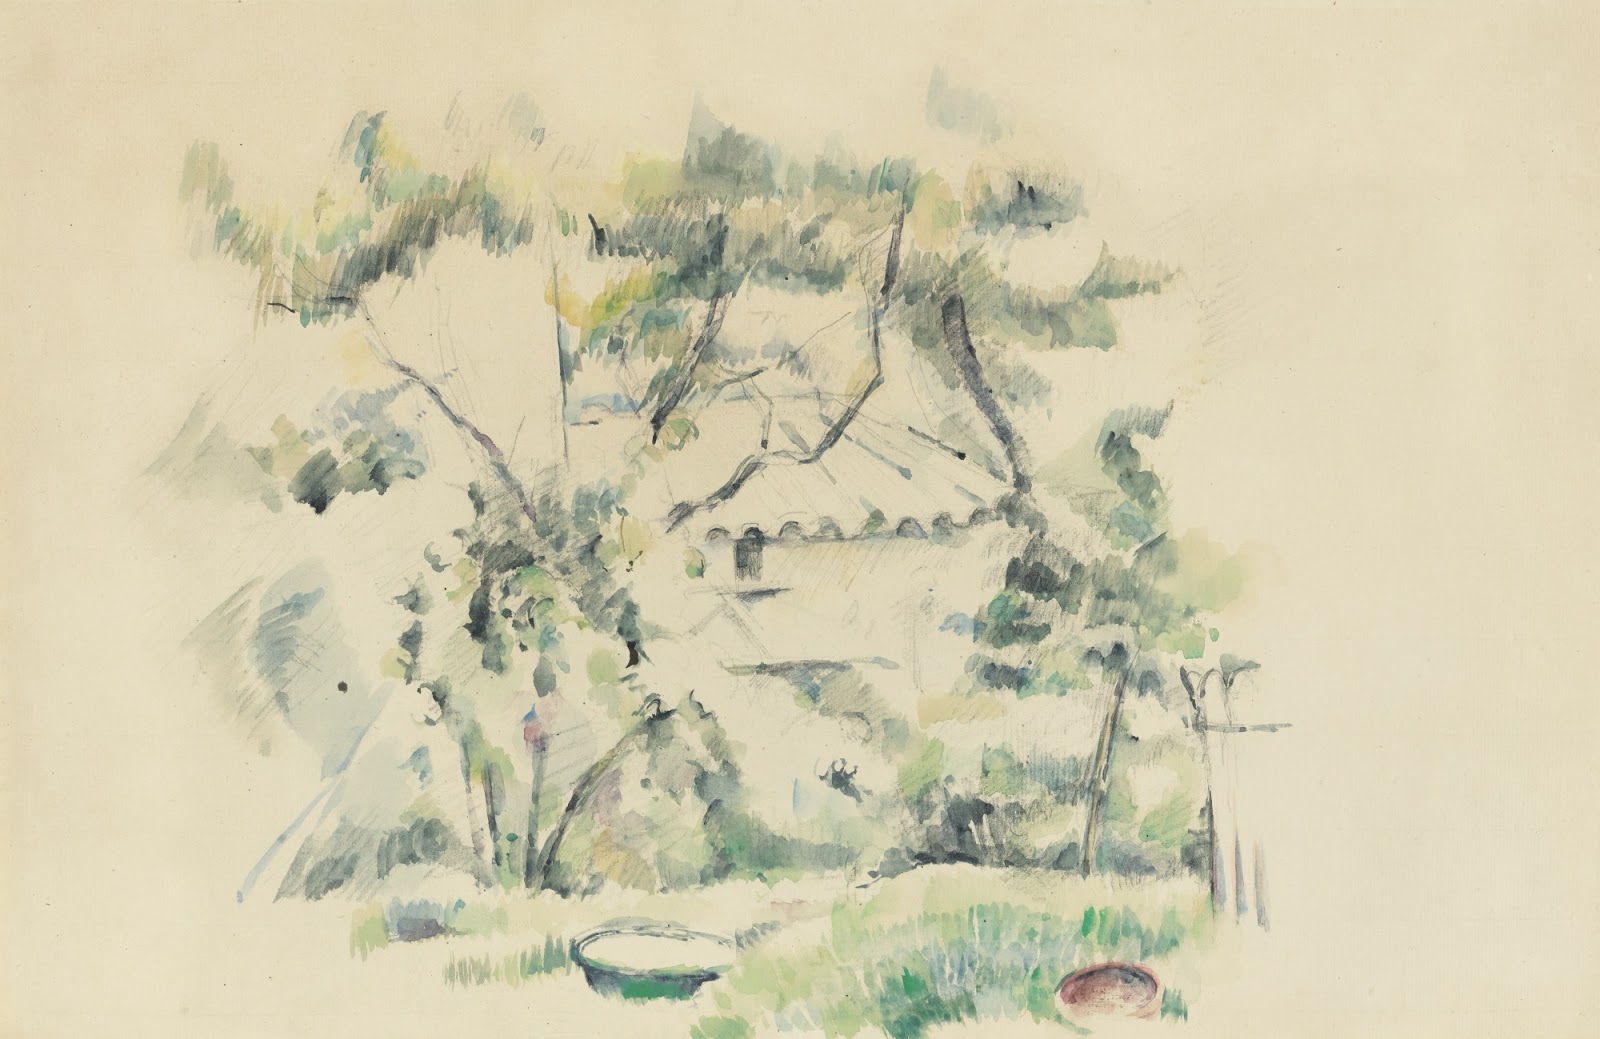 Paul+Cezanne-1839-1906 (175).jpg